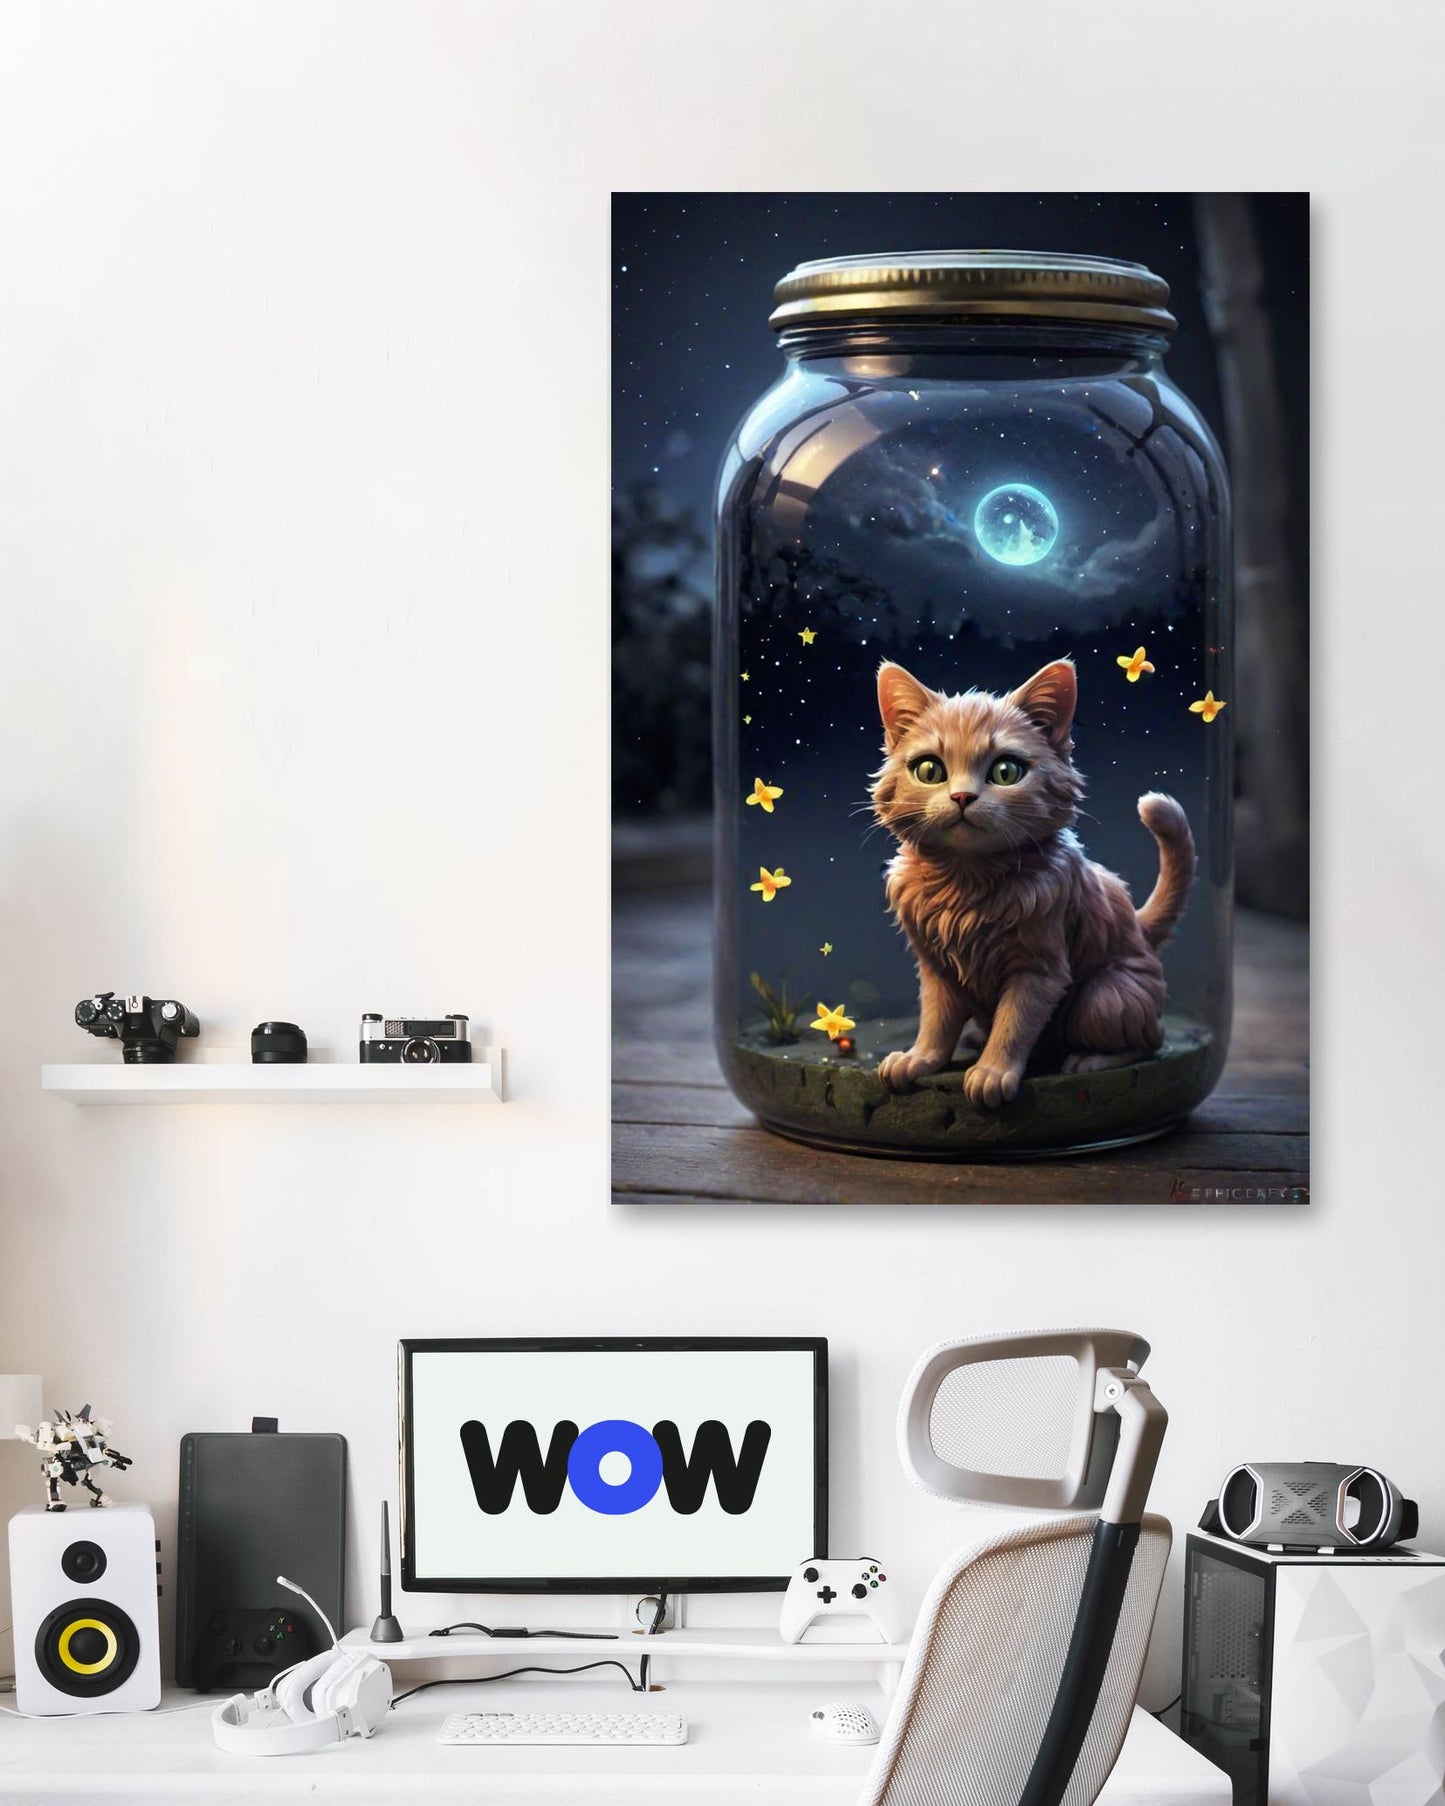 sweet cat in a jar - @PopArtStudio